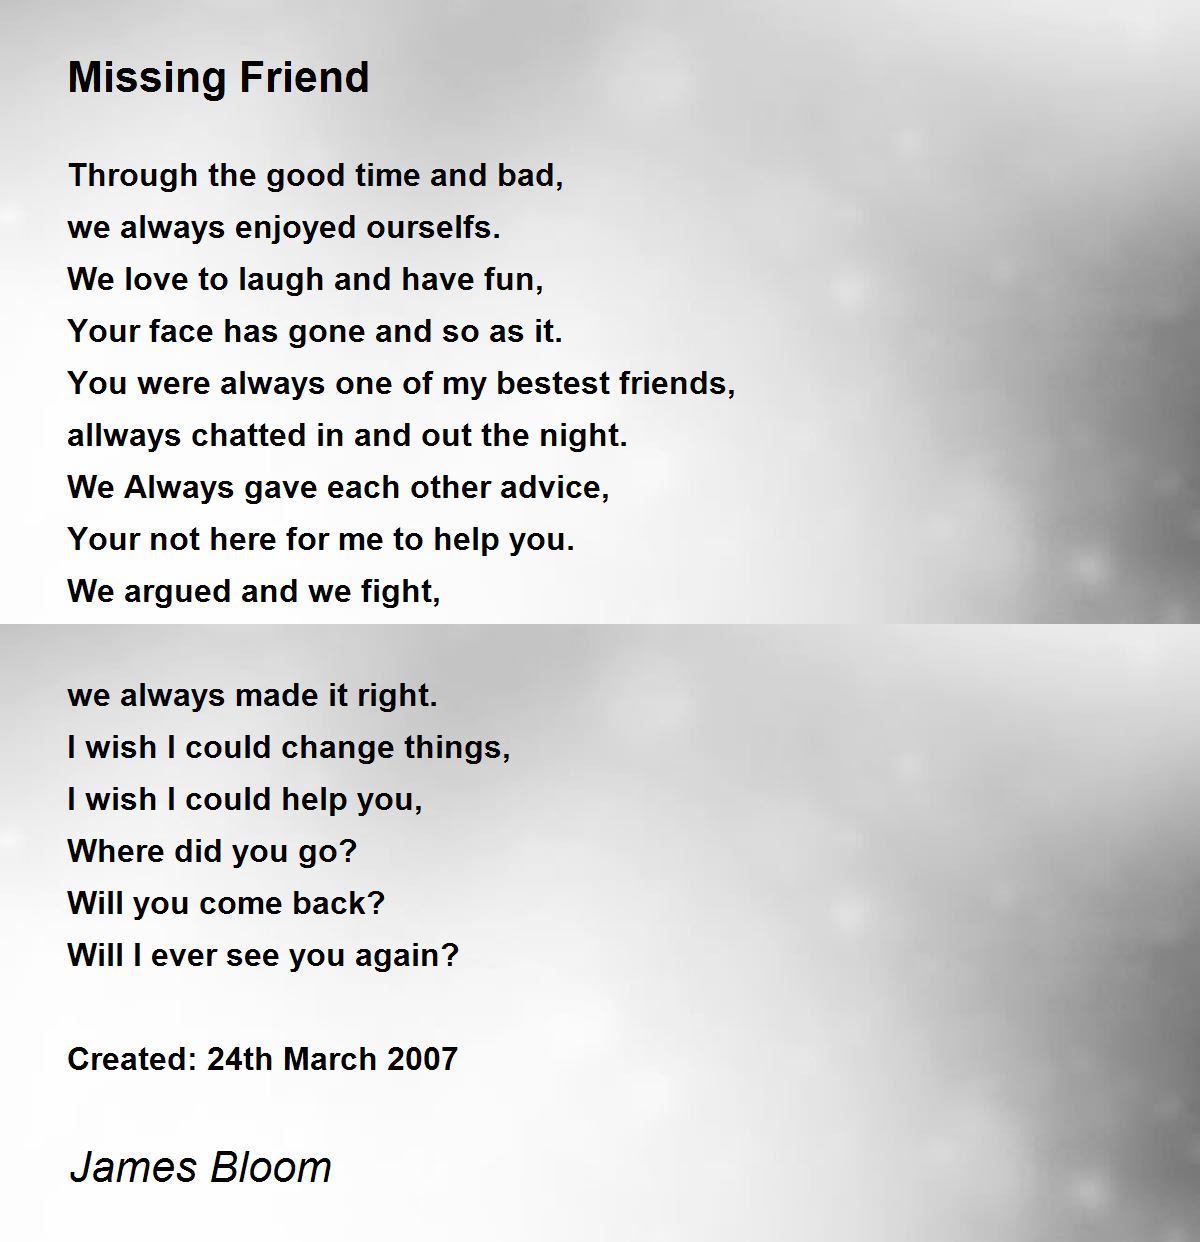 Missing Friend - Missing Friend Poem by James Bloom